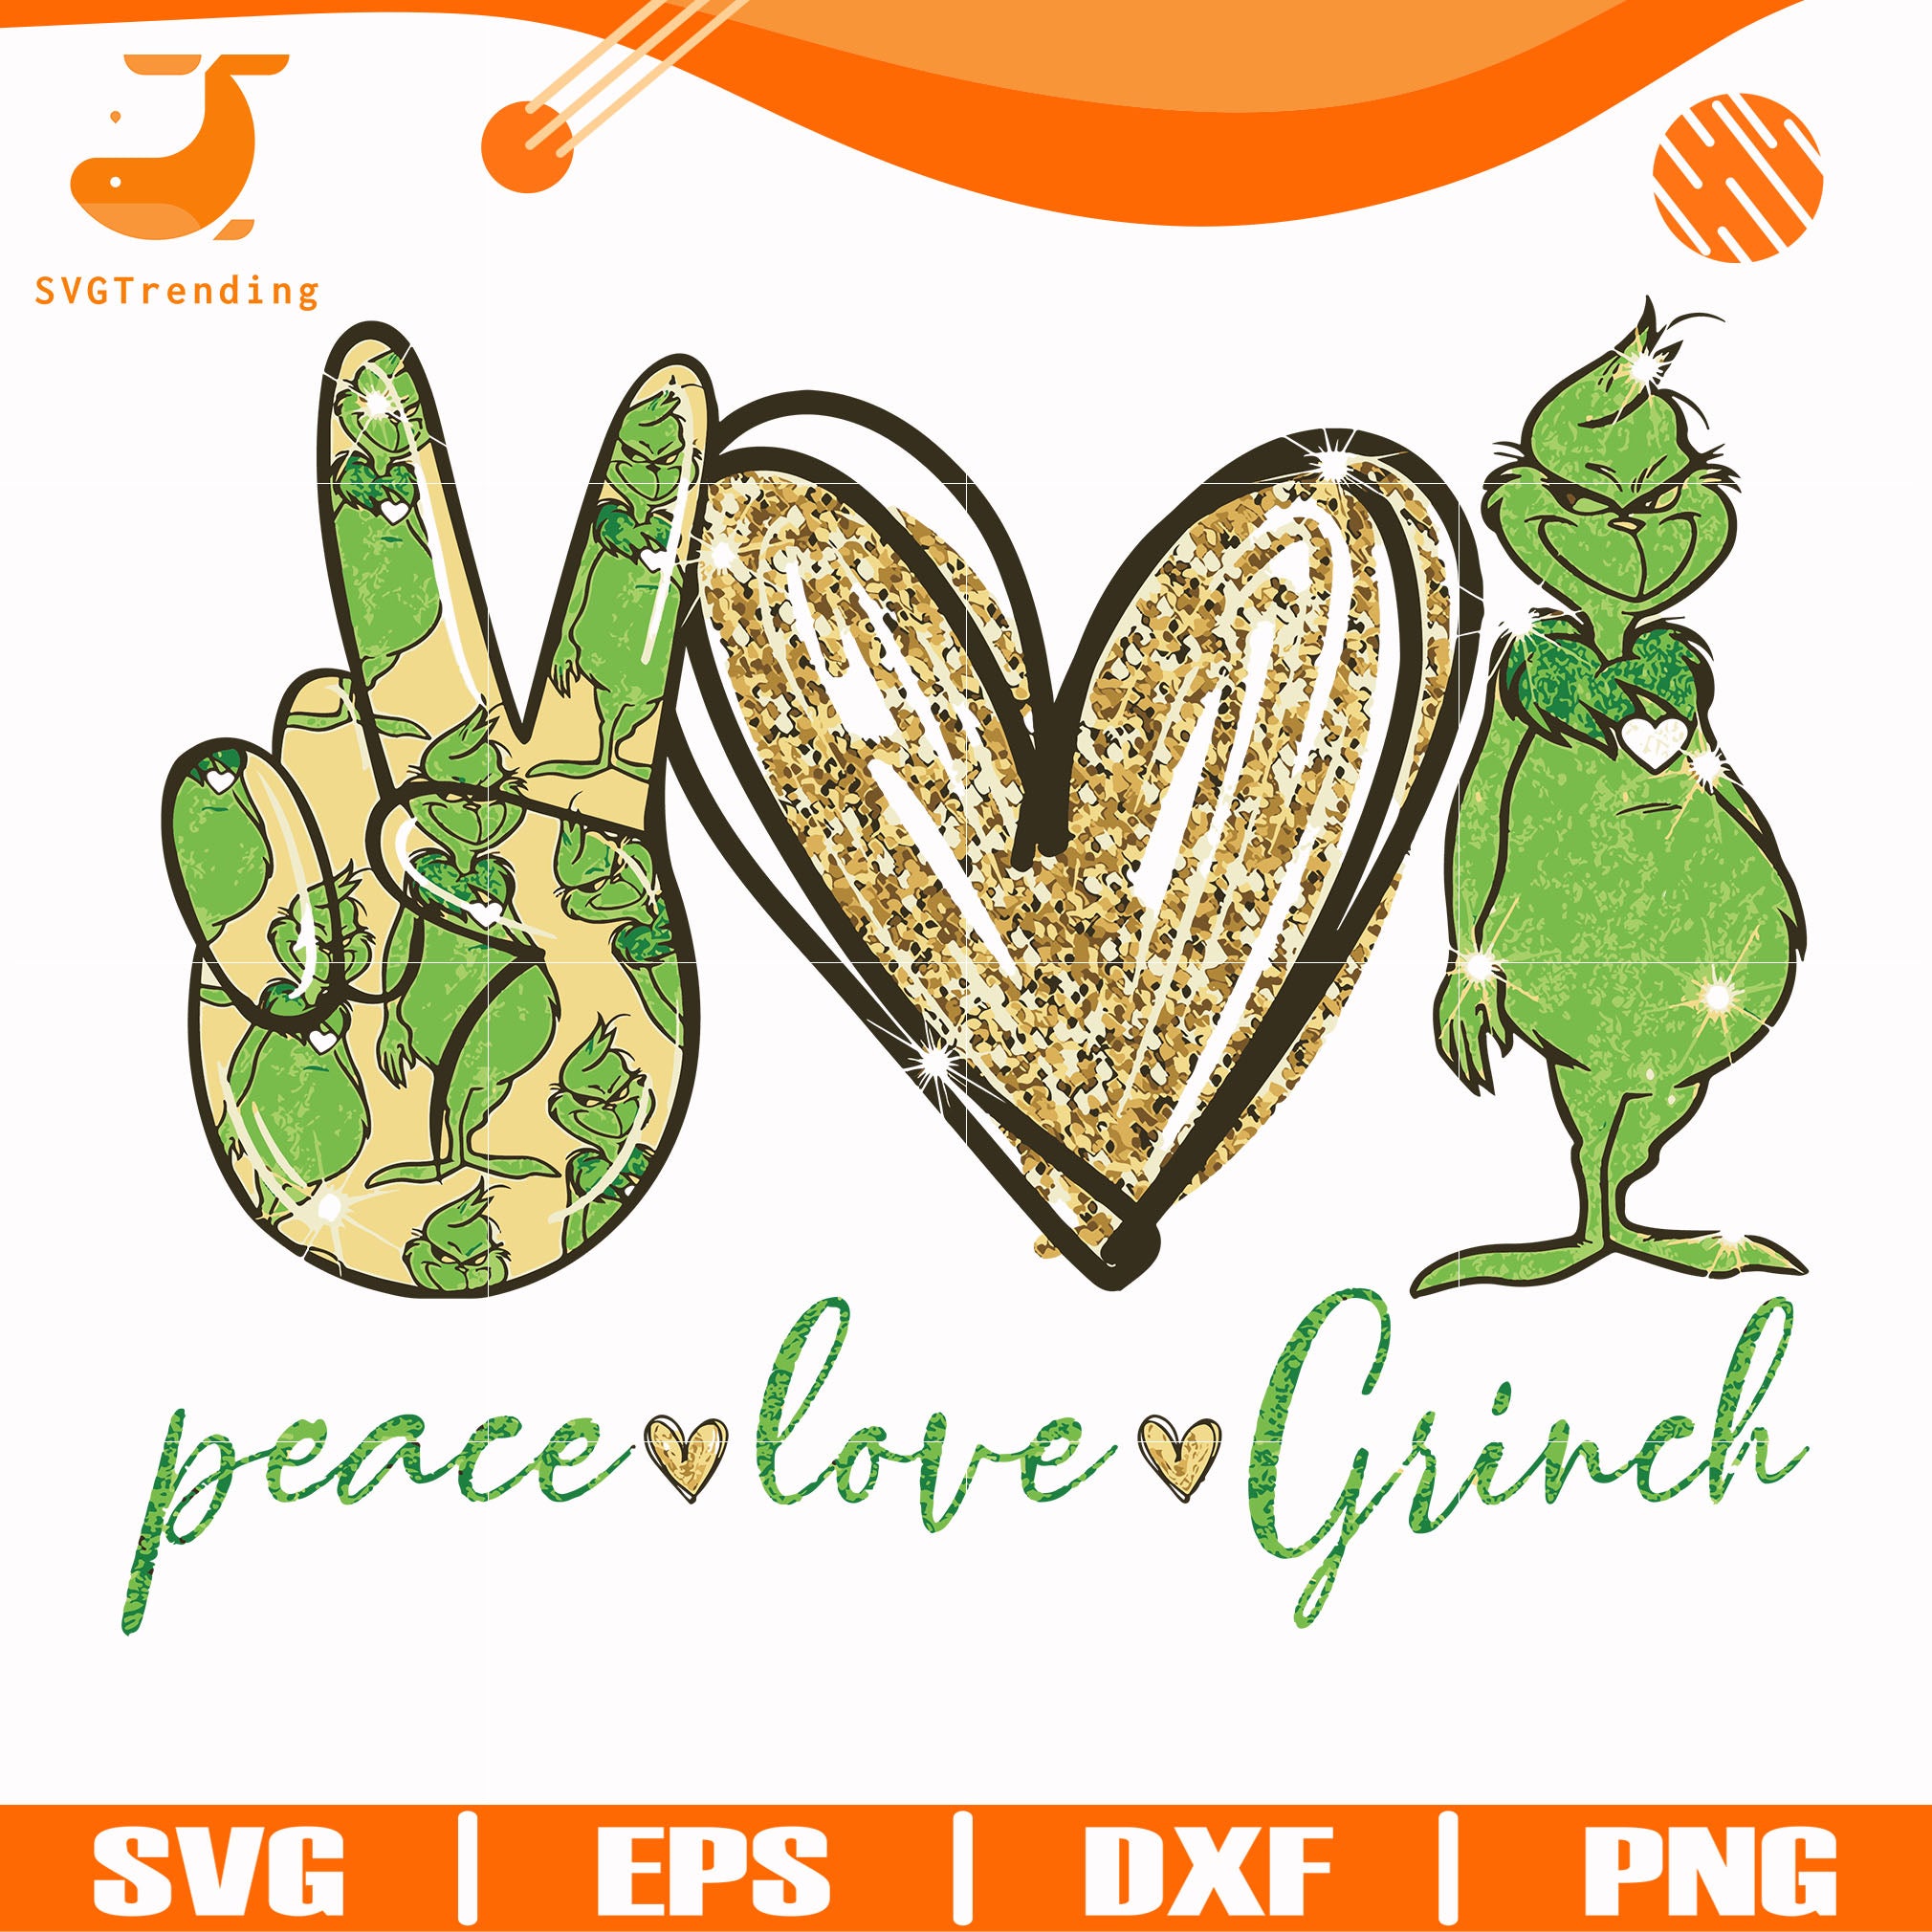 Download Peace Love Grinch Svg Png Dxf Eps Digital File Ncrm13072036 Svgtrending